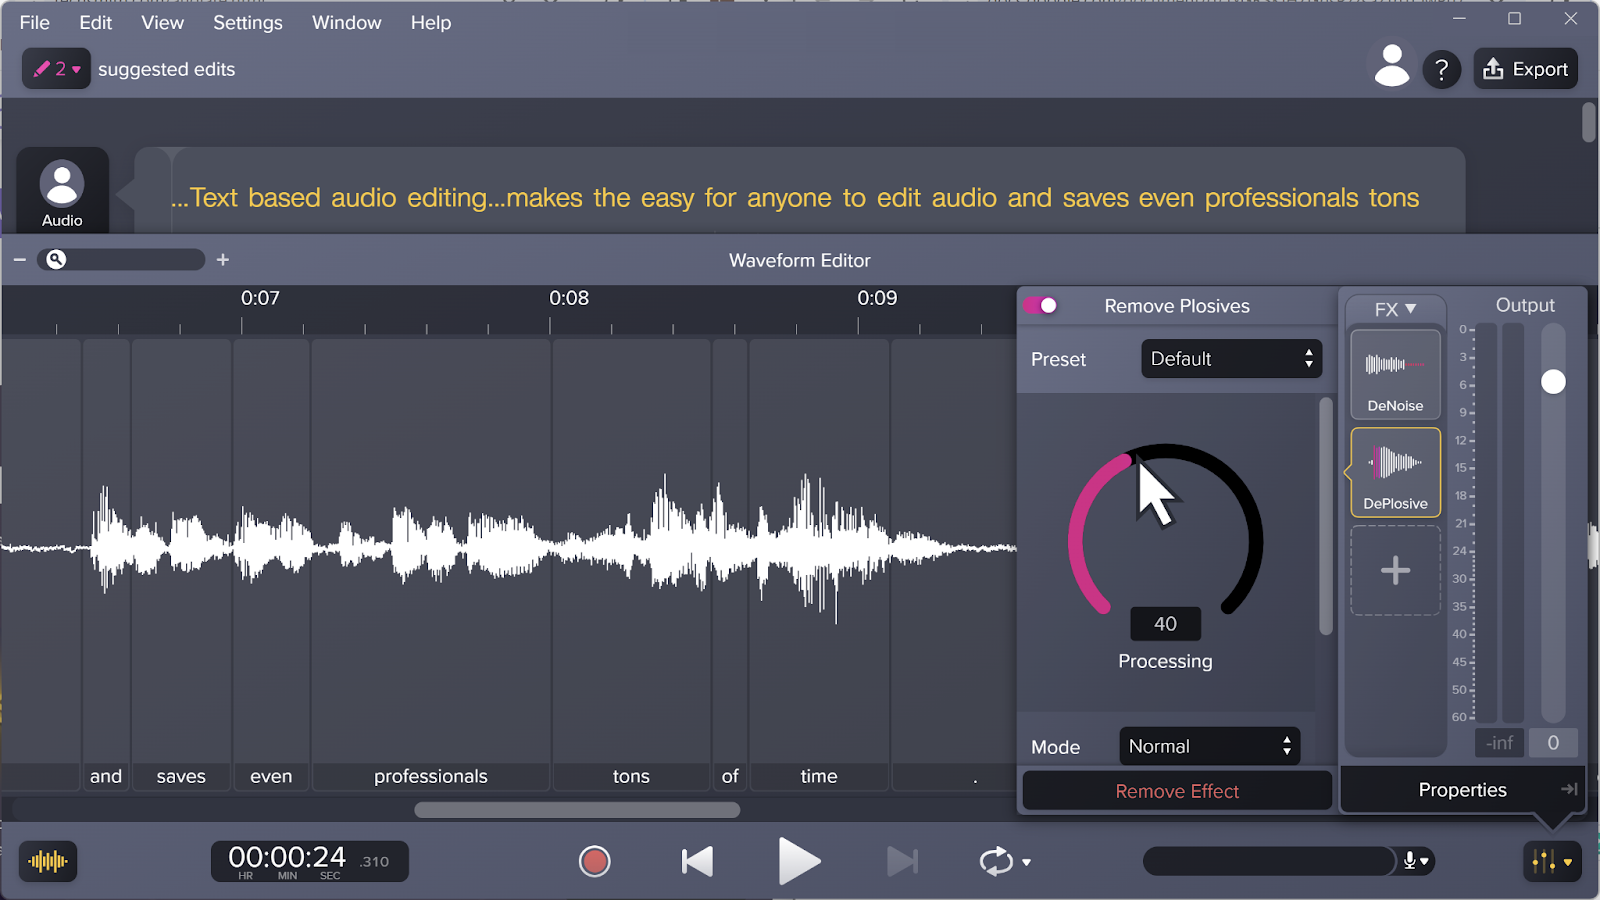 Imagem do software editor de voz Audiate que minimiza plosivas com o efeito Remover Plosivas.